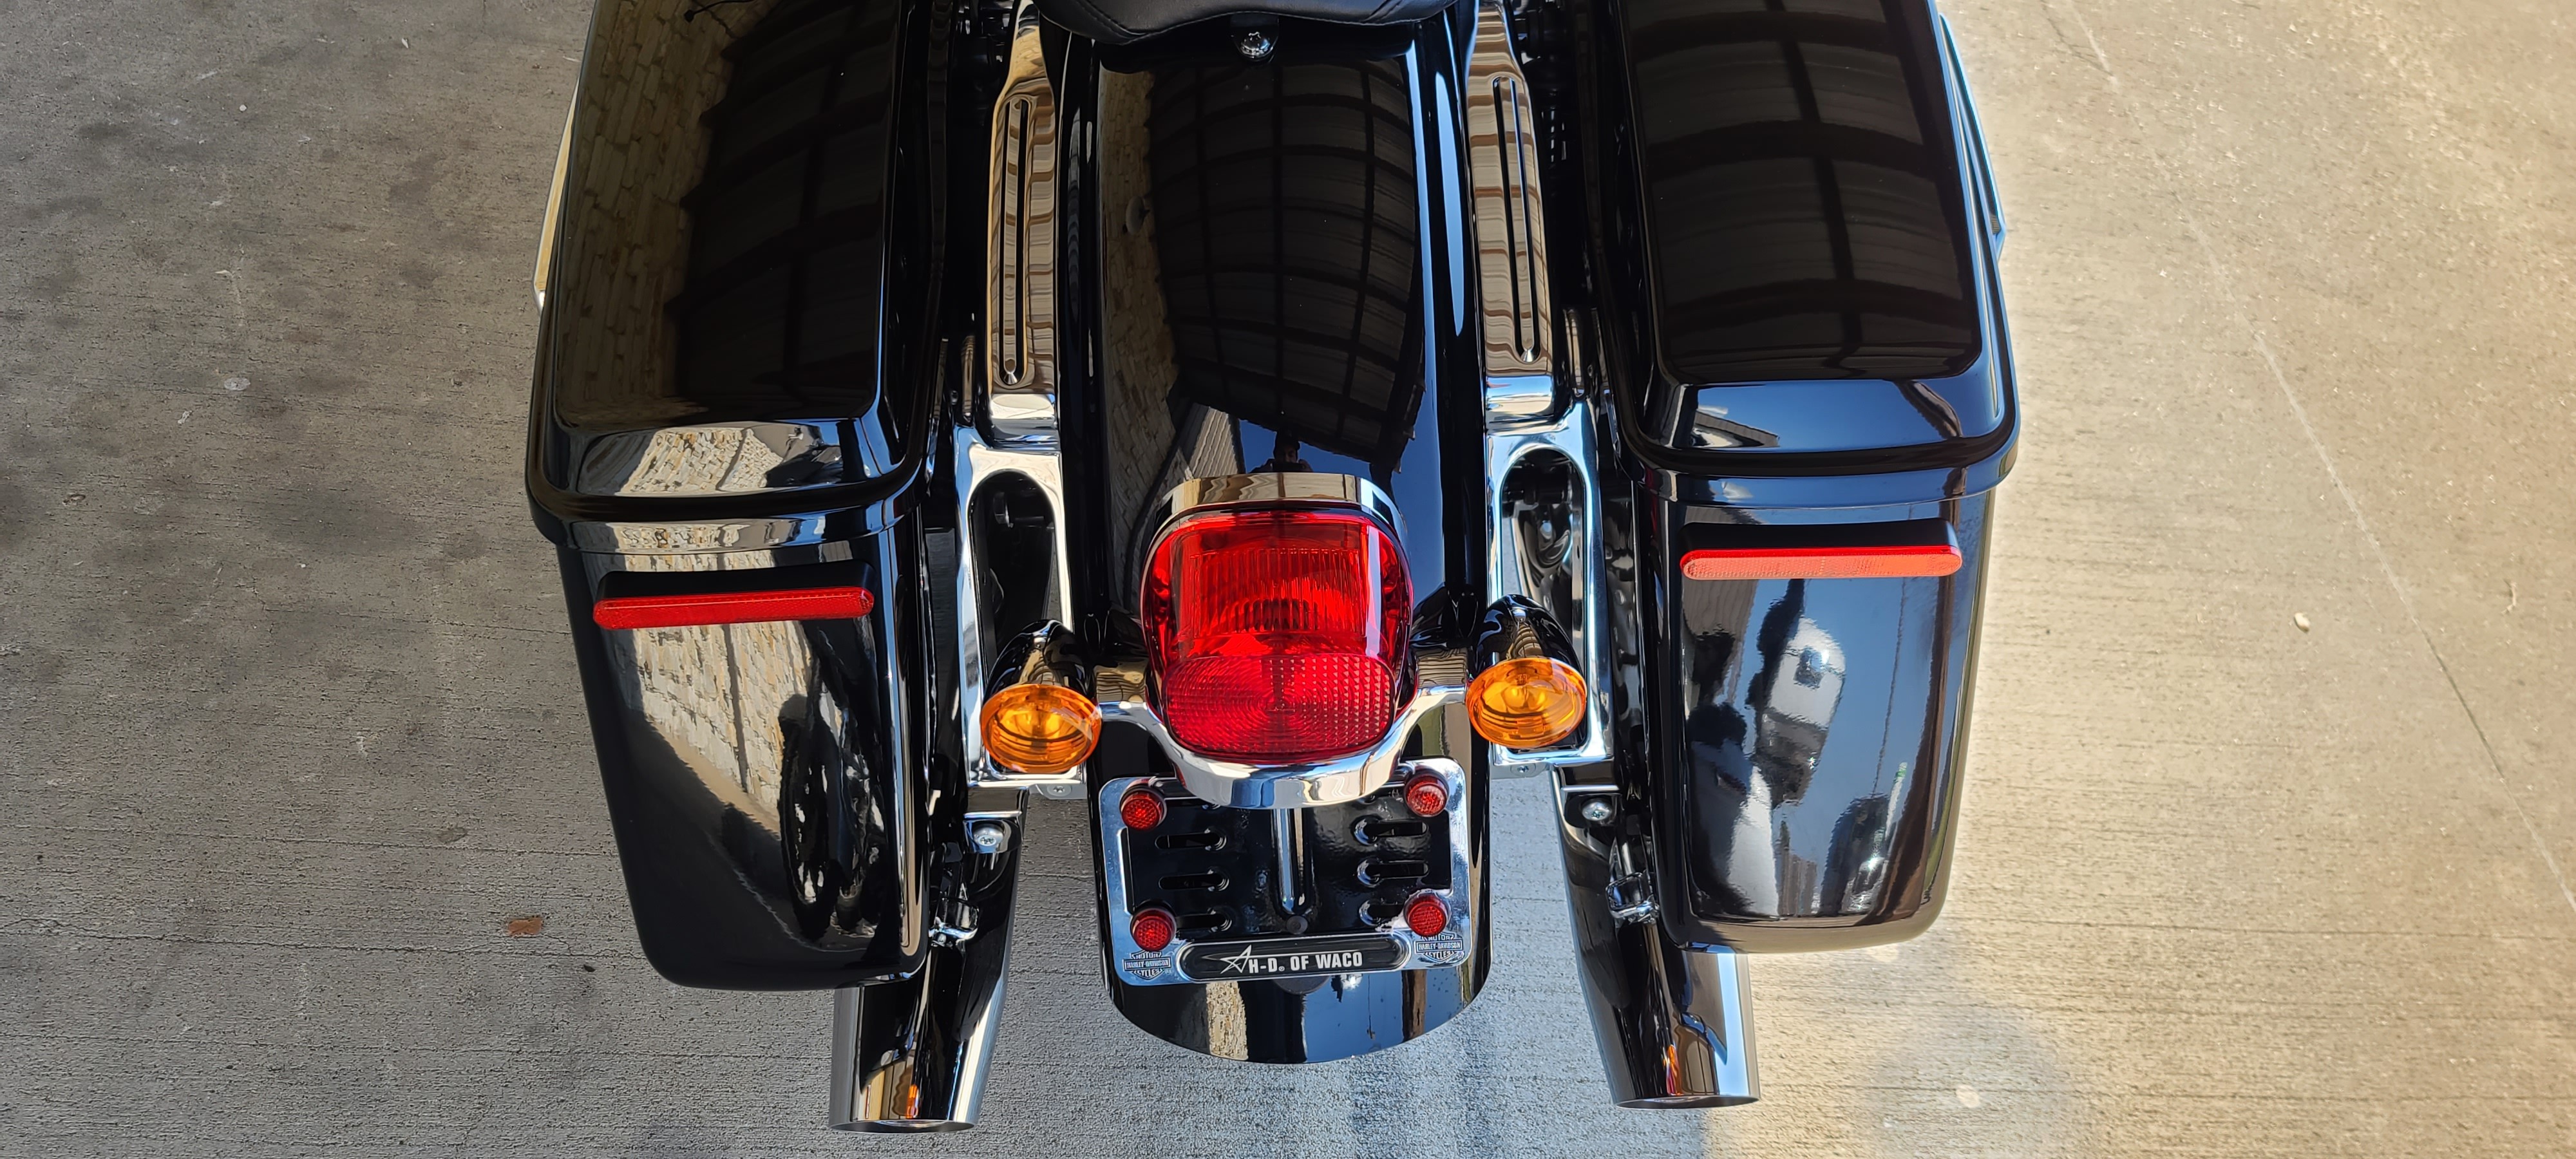 2020 Harley-Davidson Touring Electra Glide Standard at Harley-Davidson of Waco